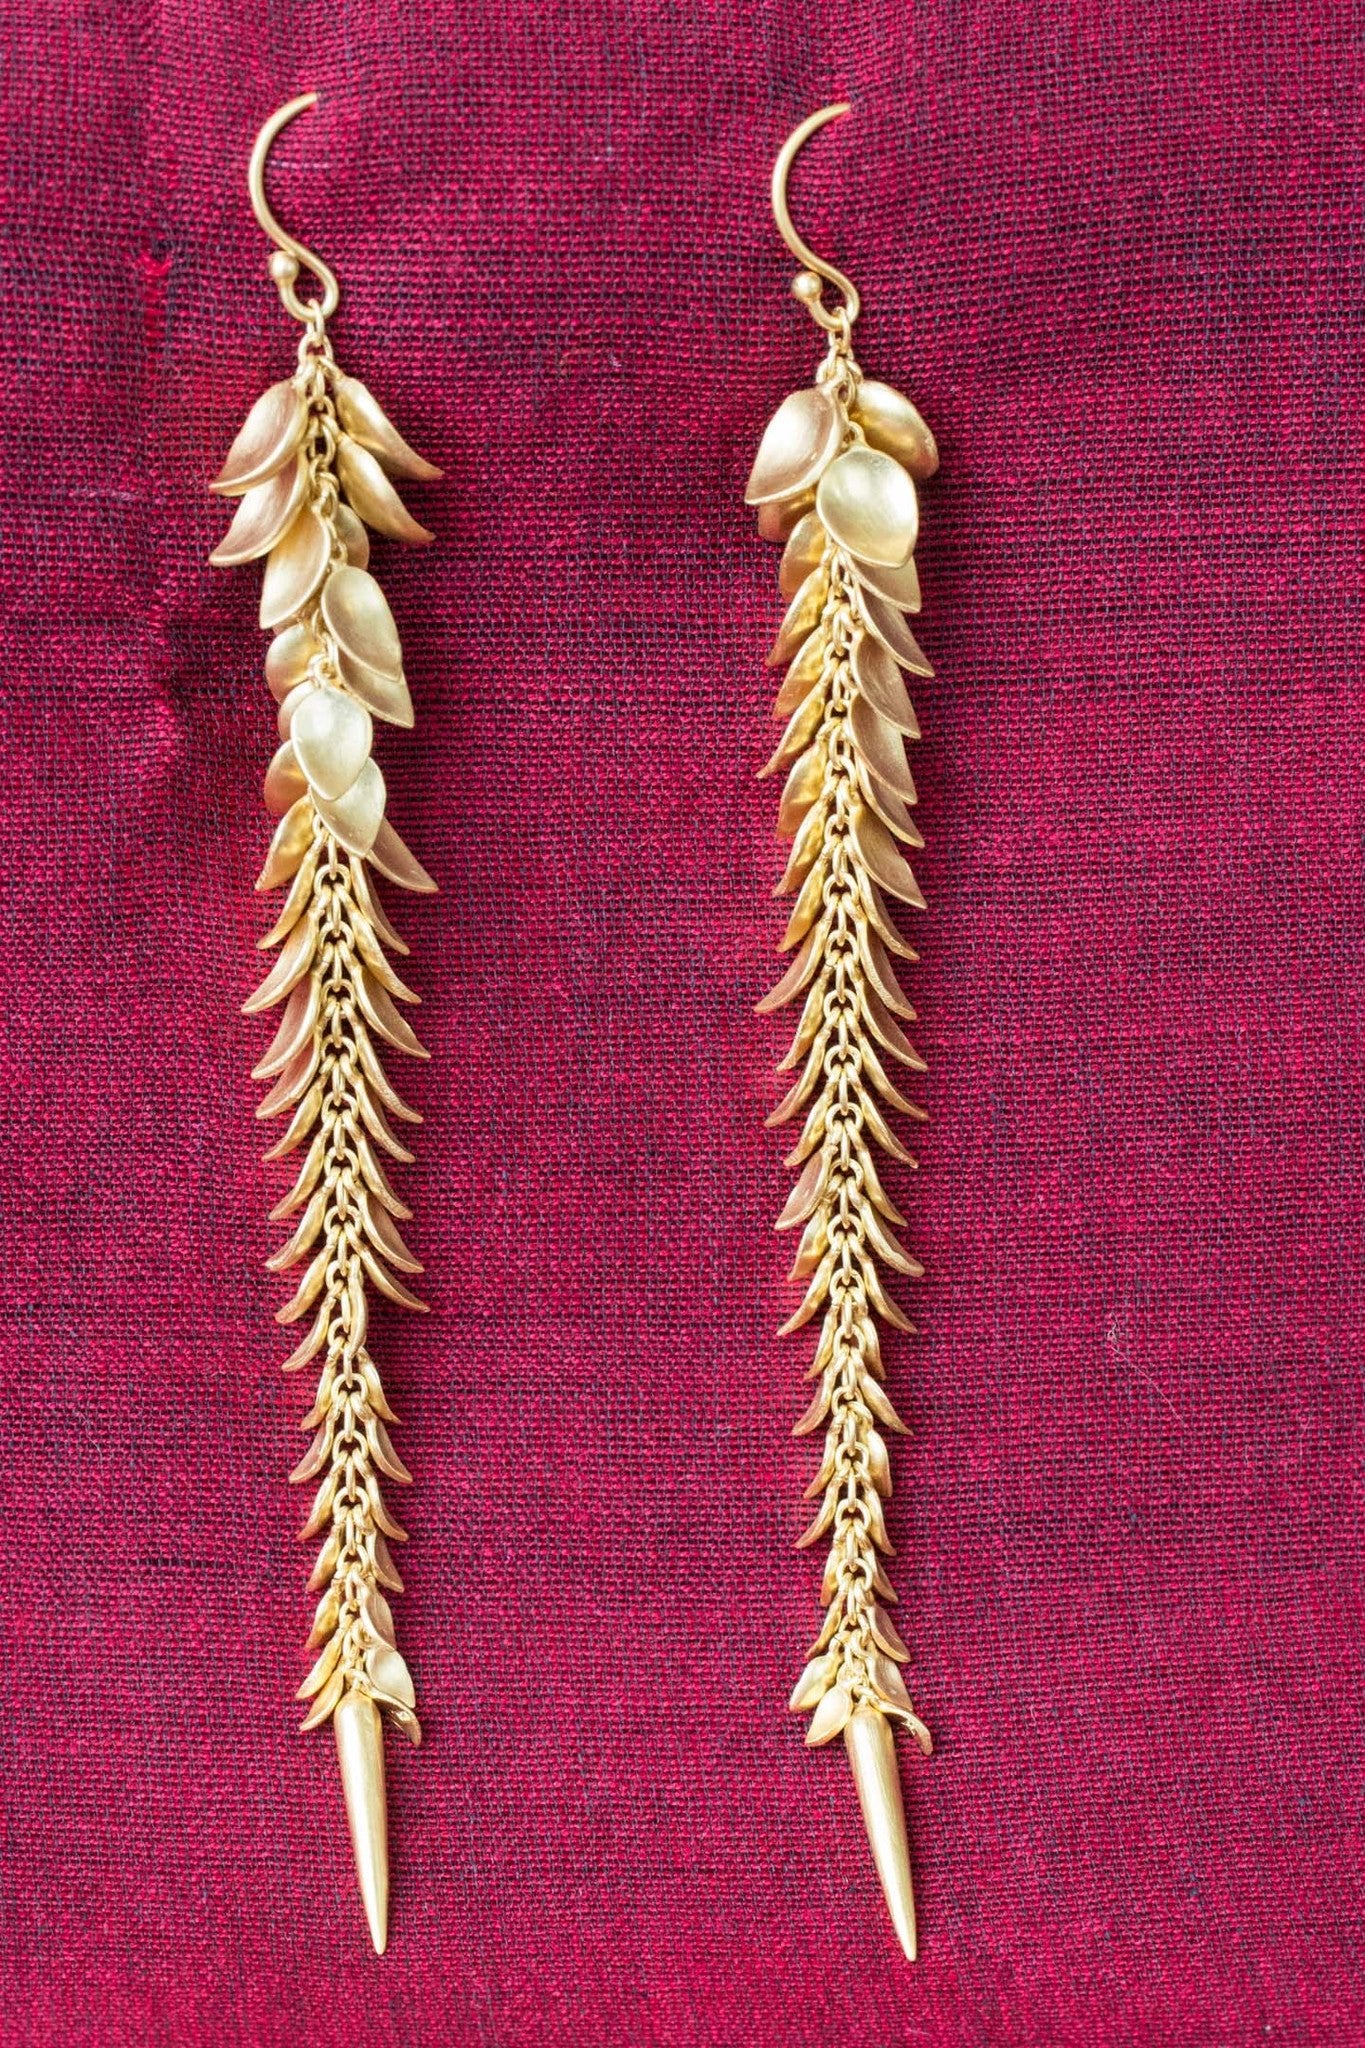 20a468-silver-gold-plated-amrapali-earrings-leaf-motif-drop